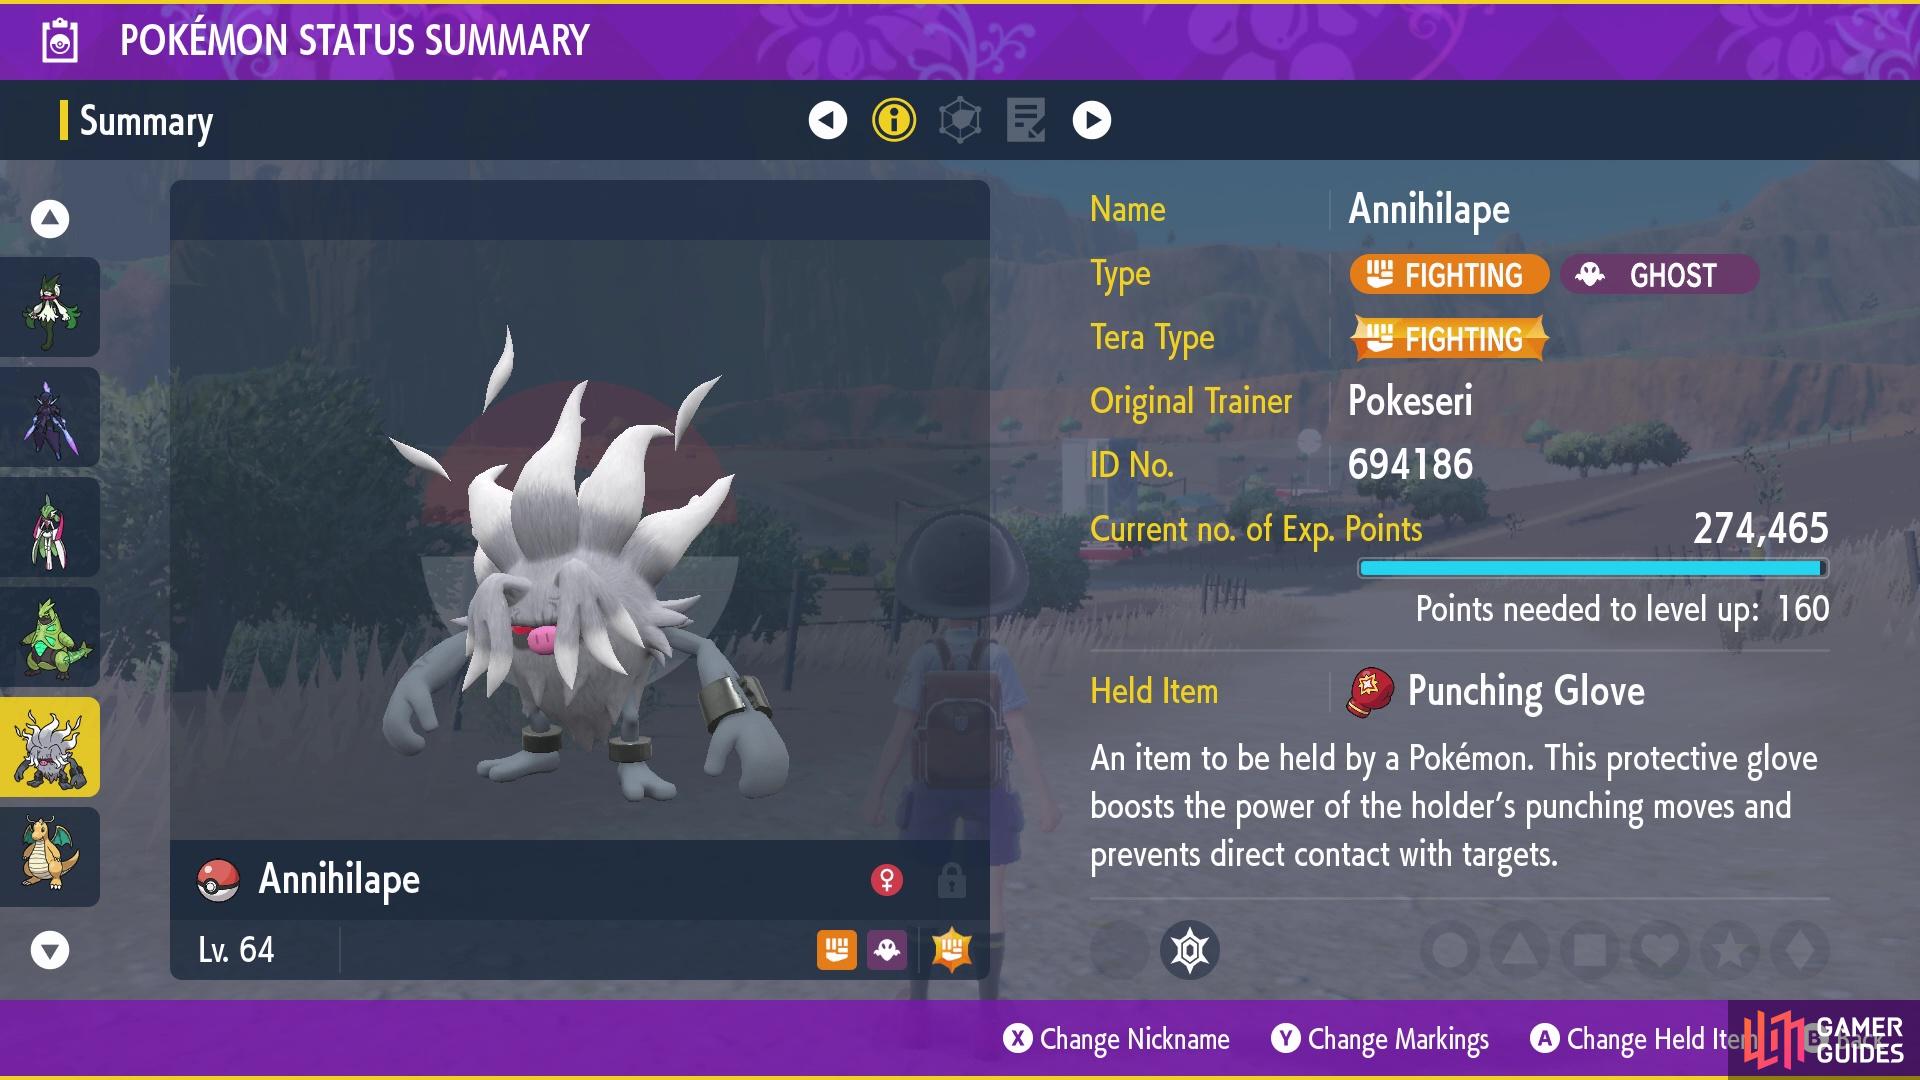 Annihilape is a Ghost Fighting type Pokémon. 